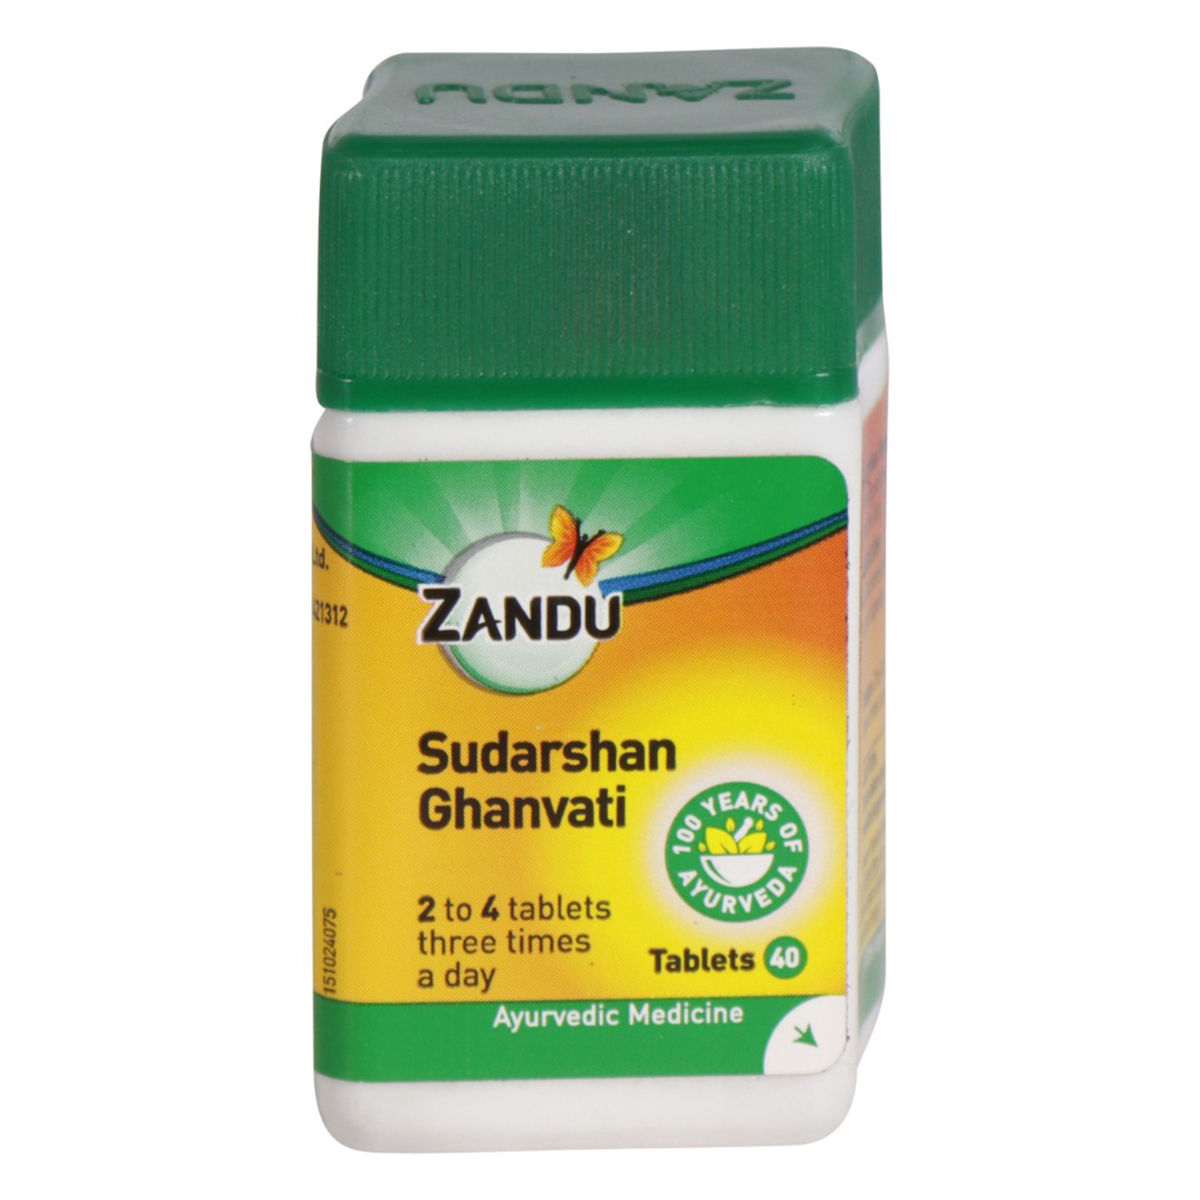 Buy Zandu Sudarshan Ghanvati, 40 Tablets Online